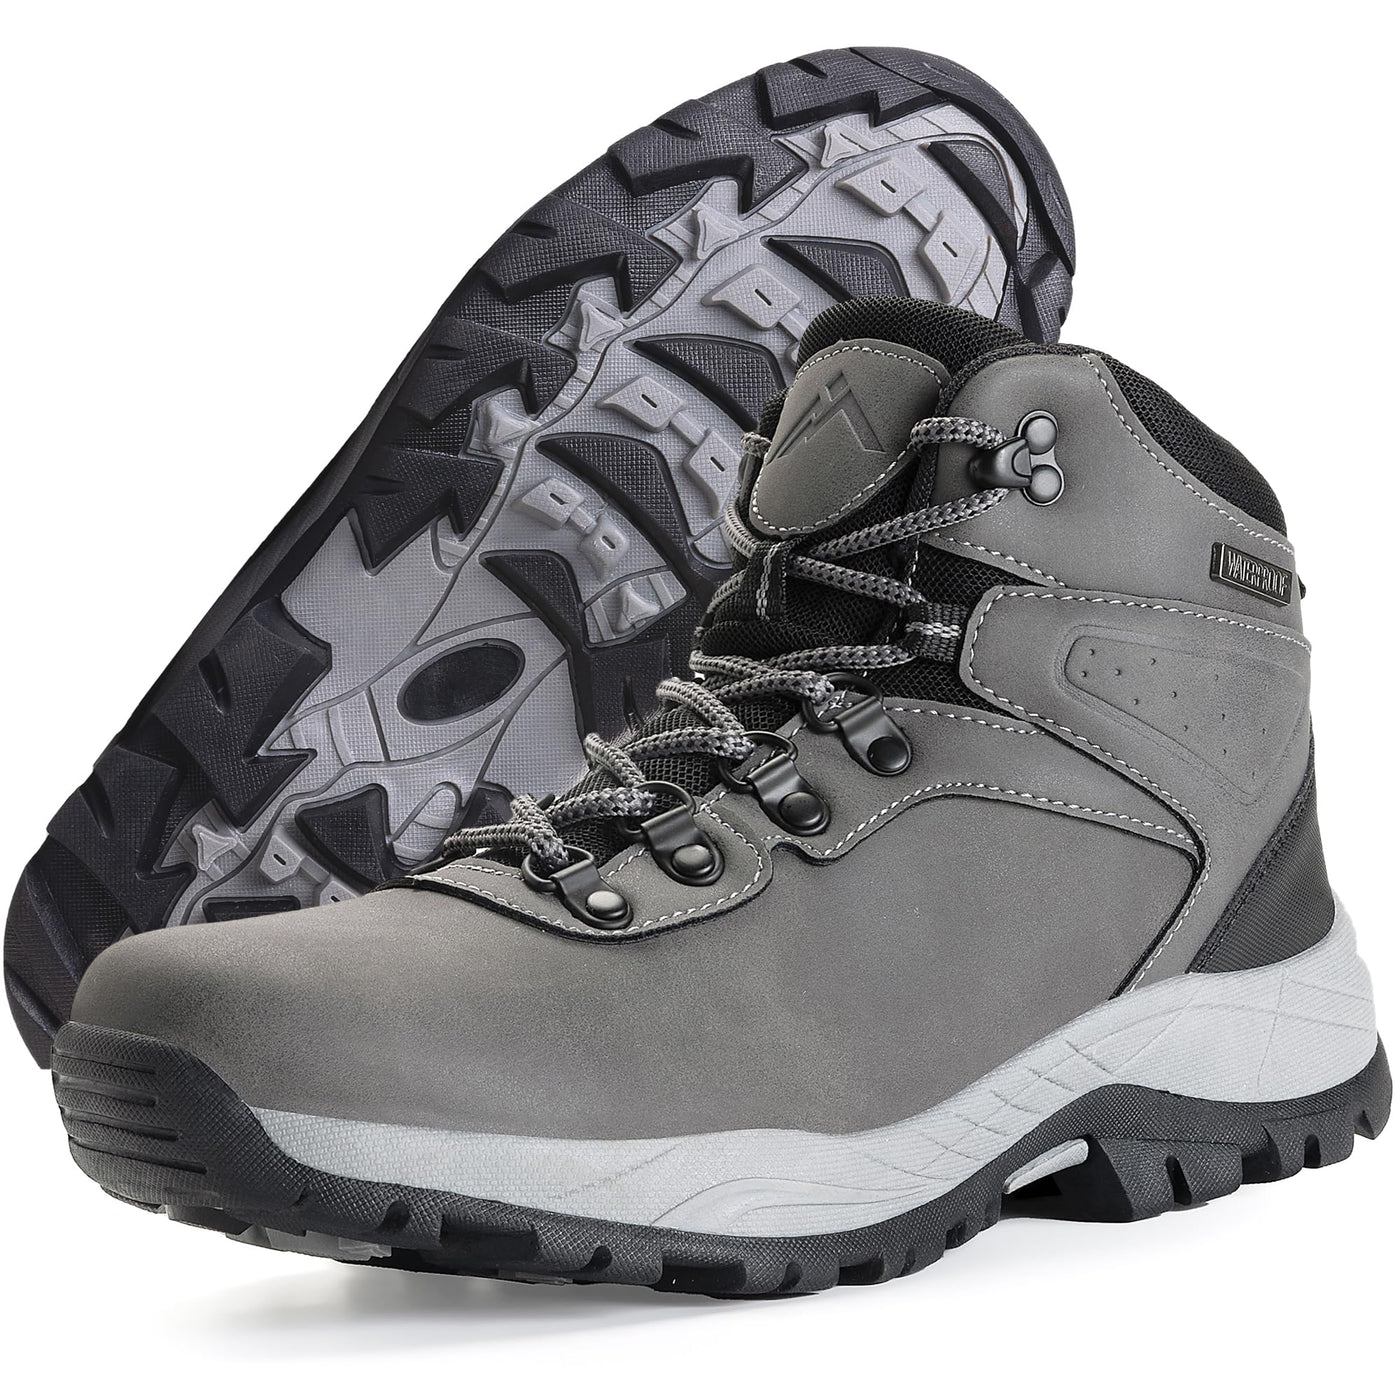 CC-Los Women's Waterproof Hiking Boots C104